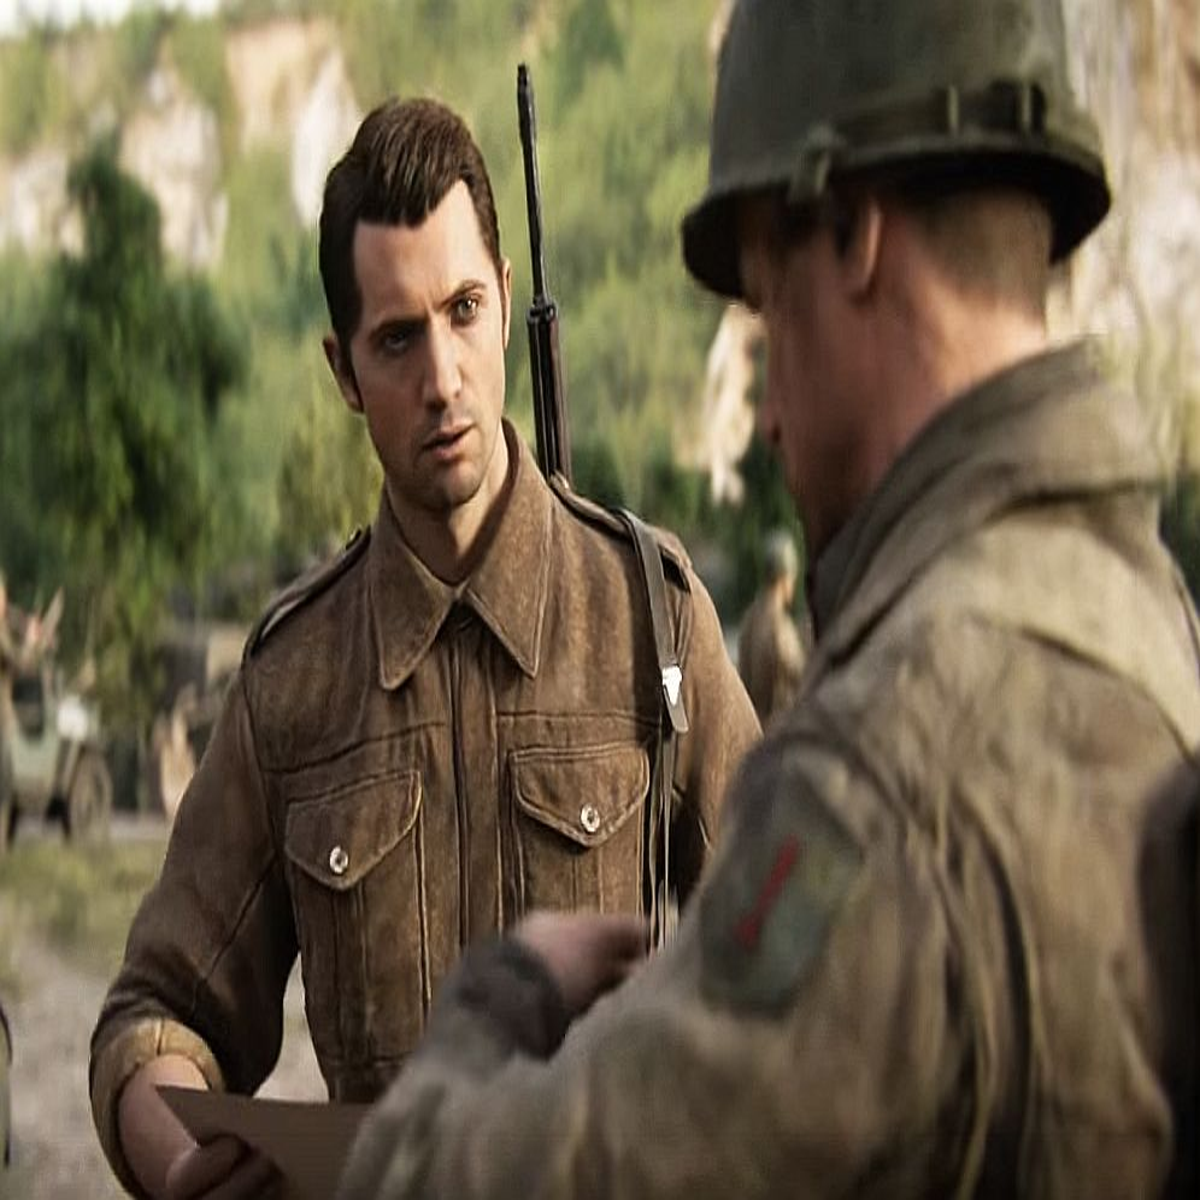 Call of Duty: WWII  Rock Paper Shotgun